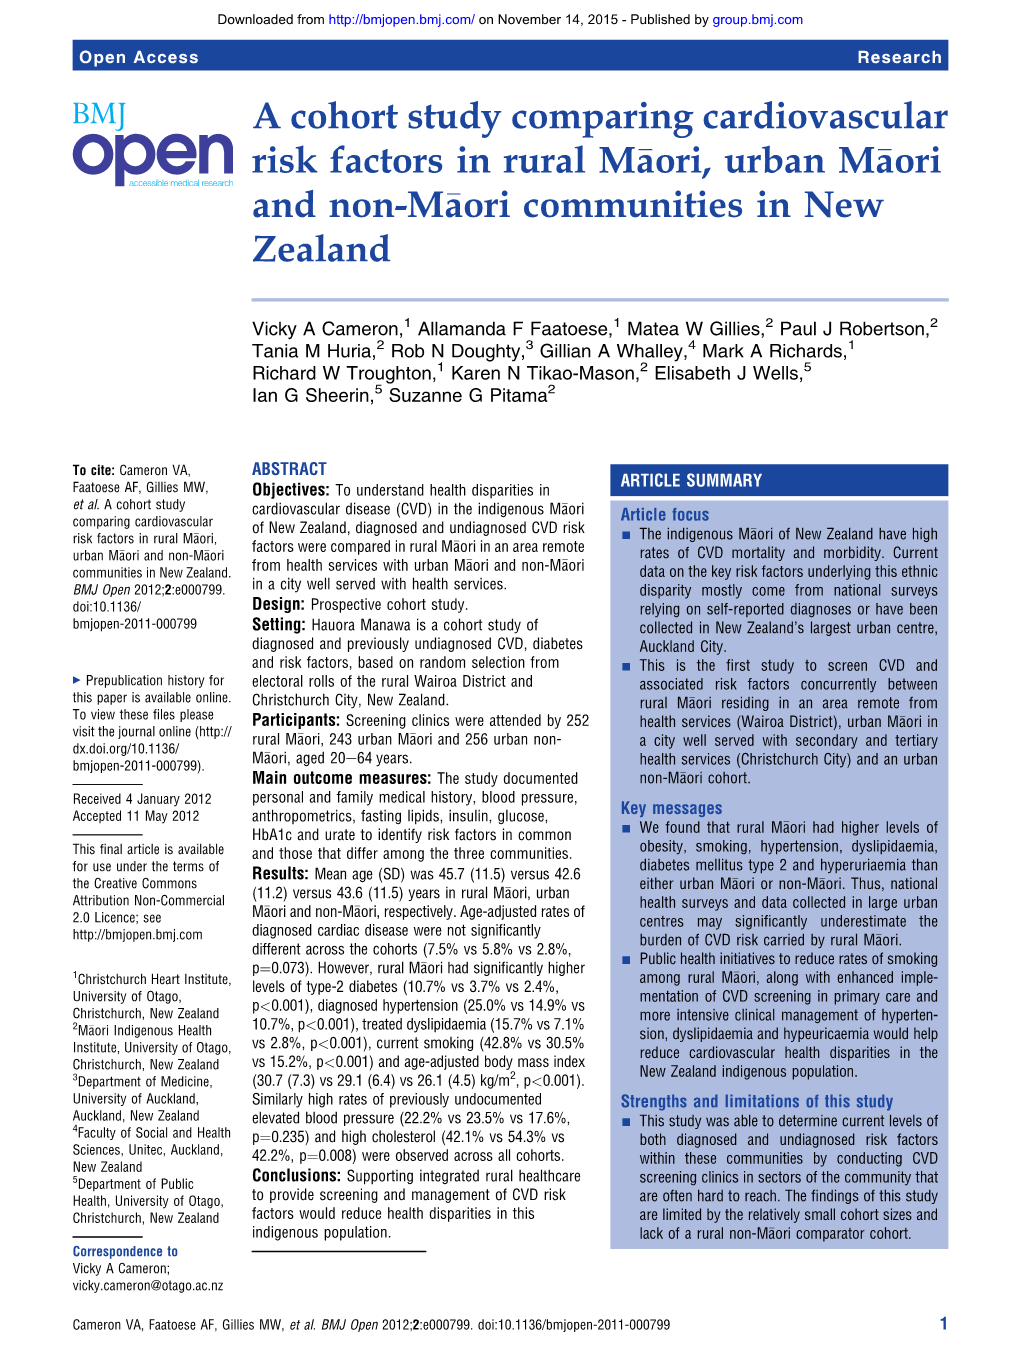 A Cohort Study Comparing Cardiovascular Risk Factors in Rural Maori, Urban Maori and Non-Maori Communities in New Zealand